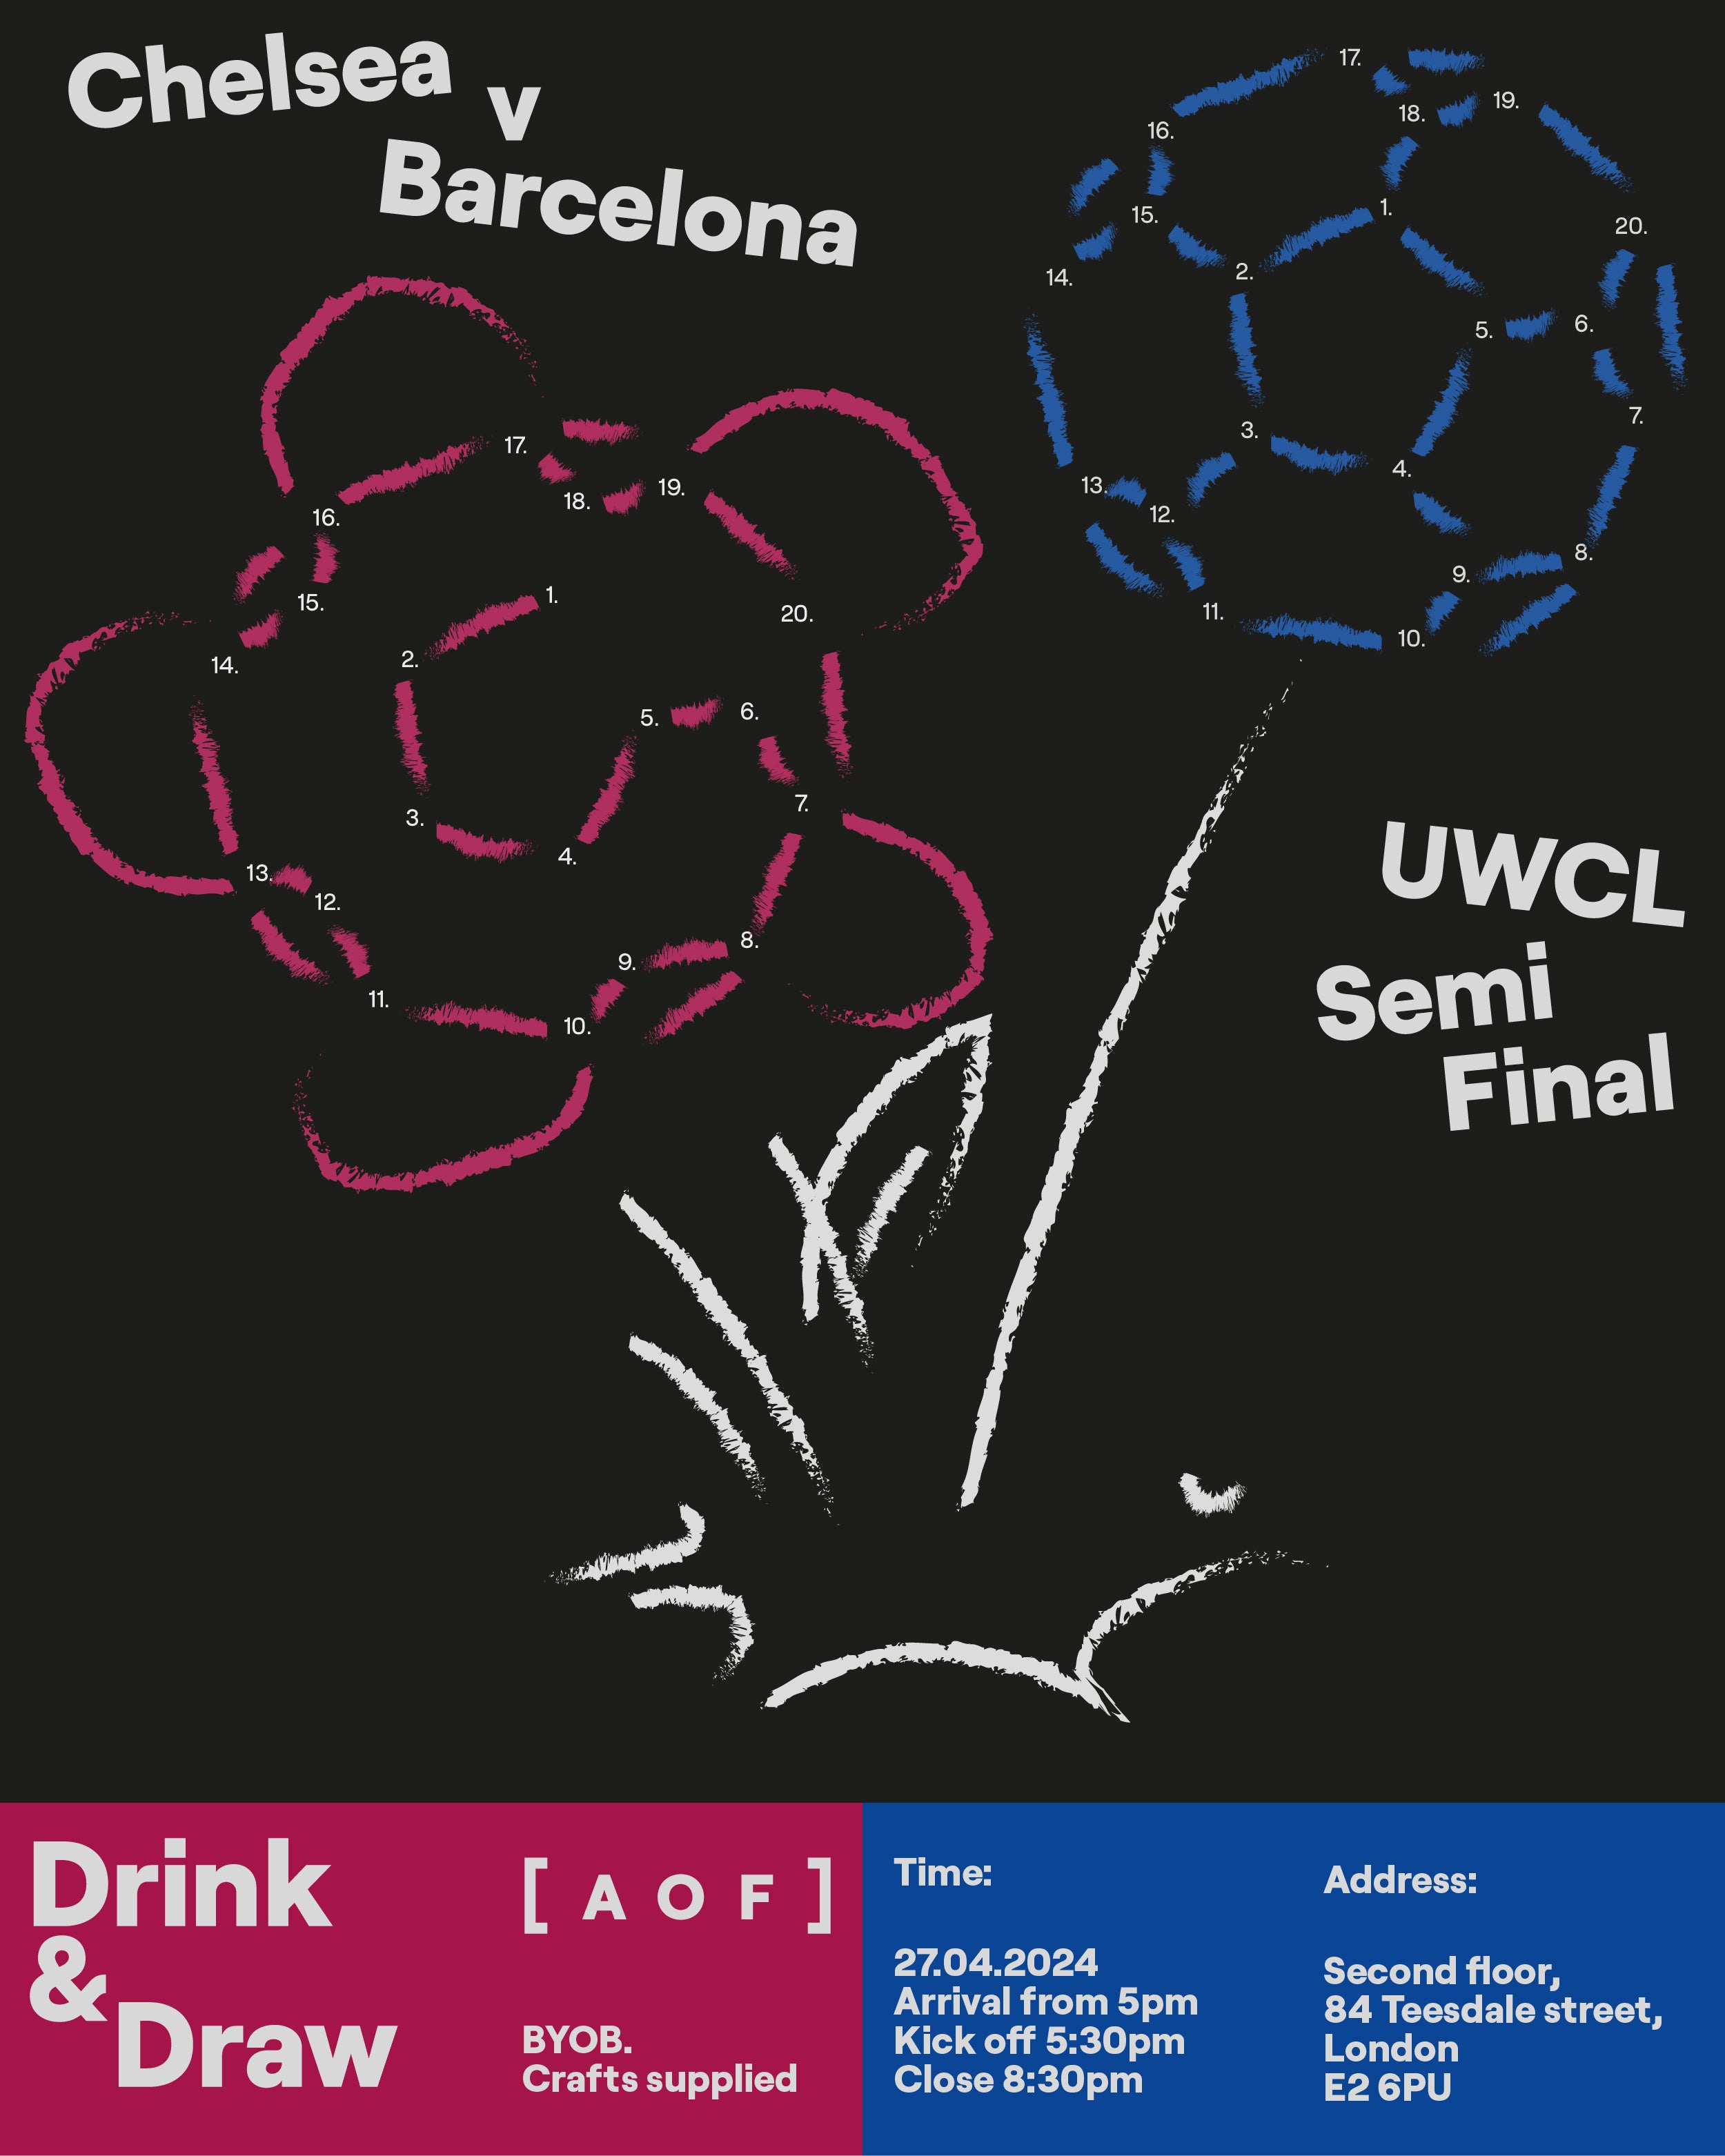 Drink n Draw: Chelsea v Barcelona UWCL